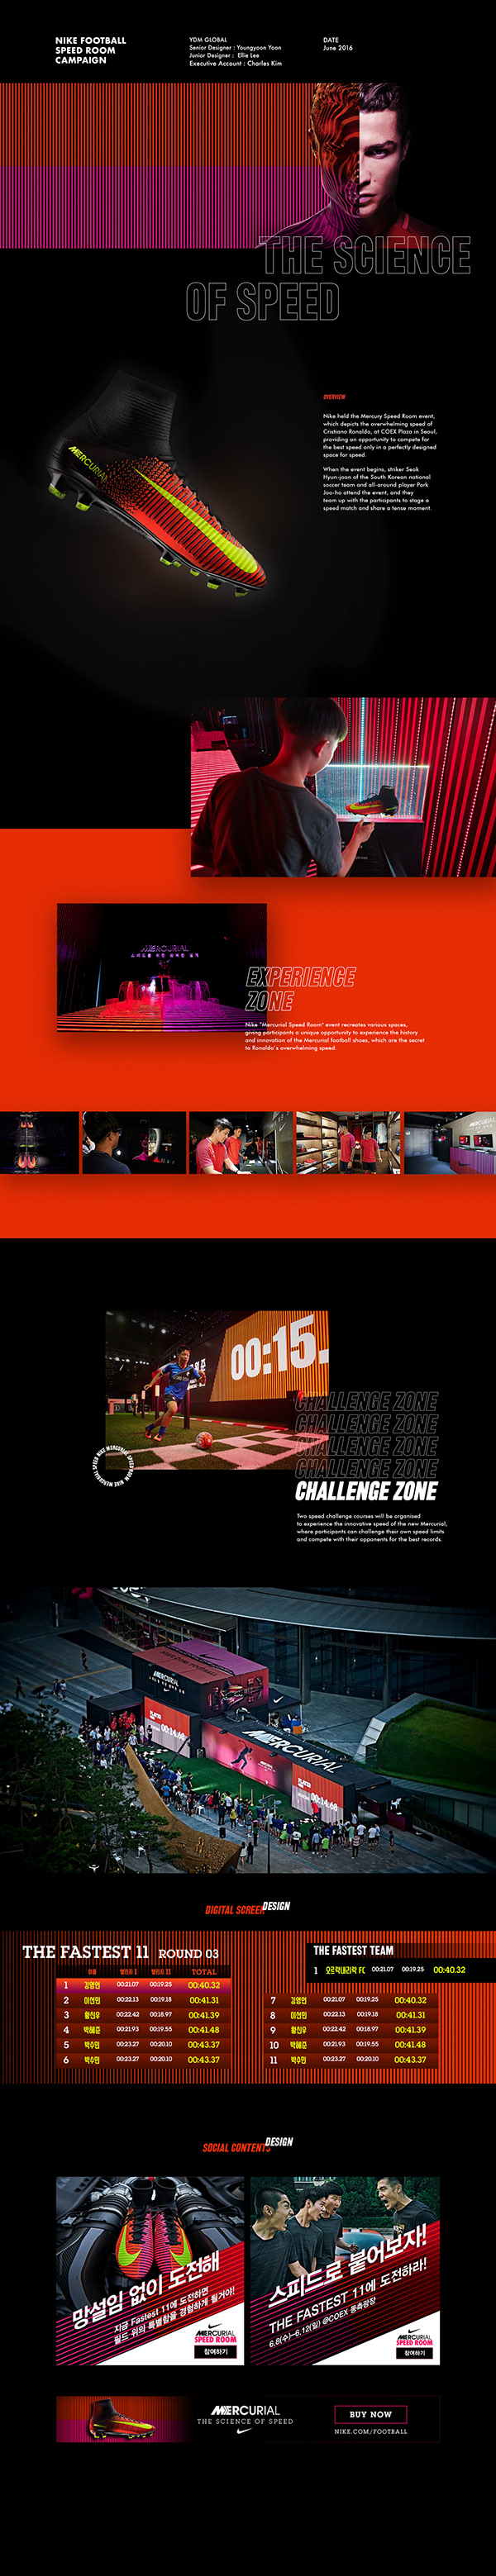 Nike Football - Campaign